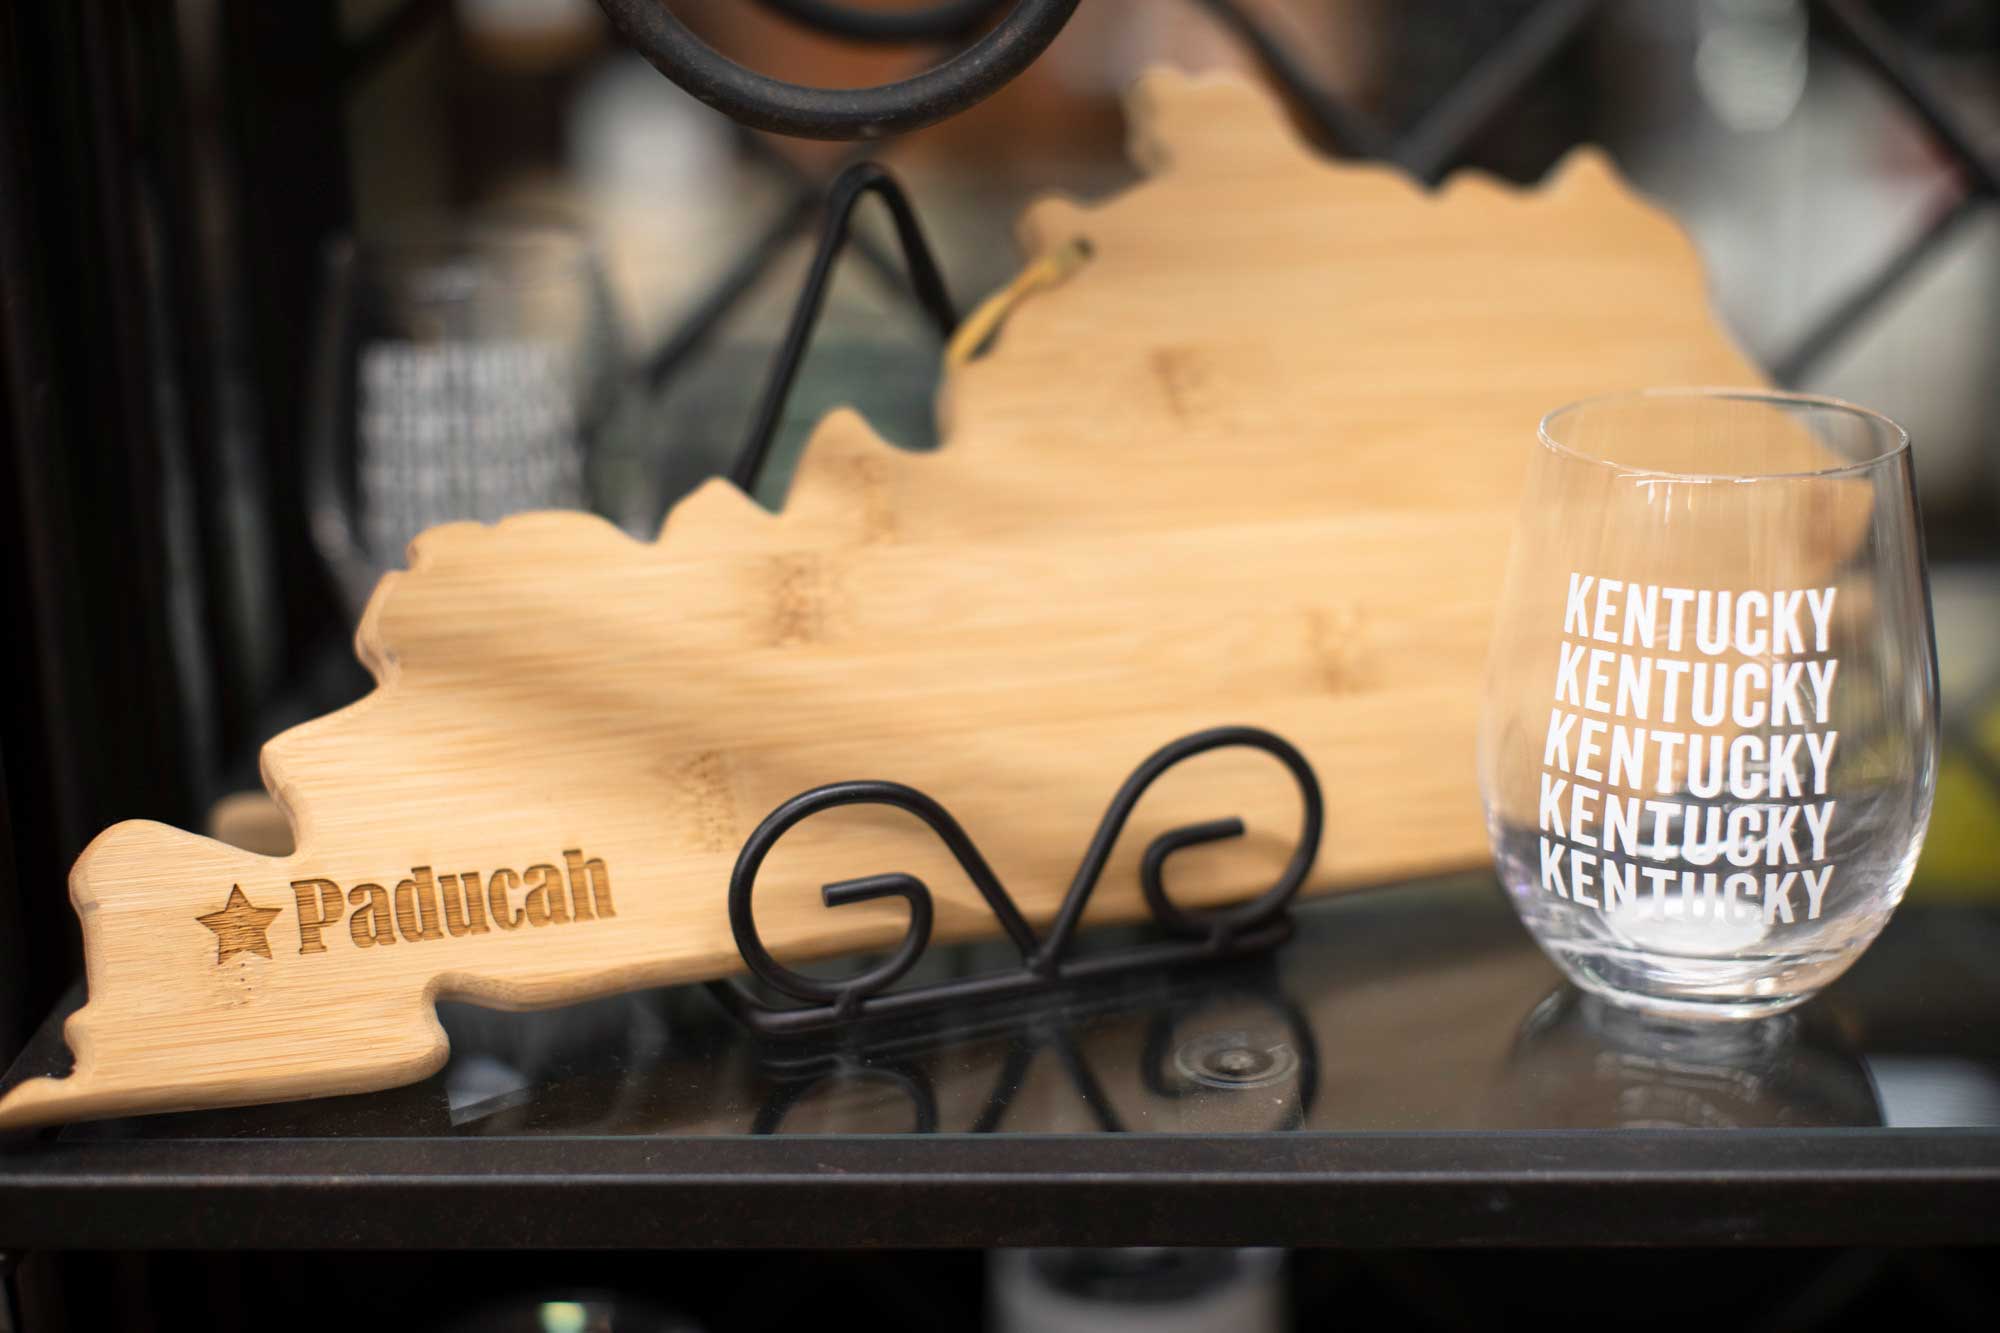 Paducah, Kentucky cutting board and a Kentucky glass